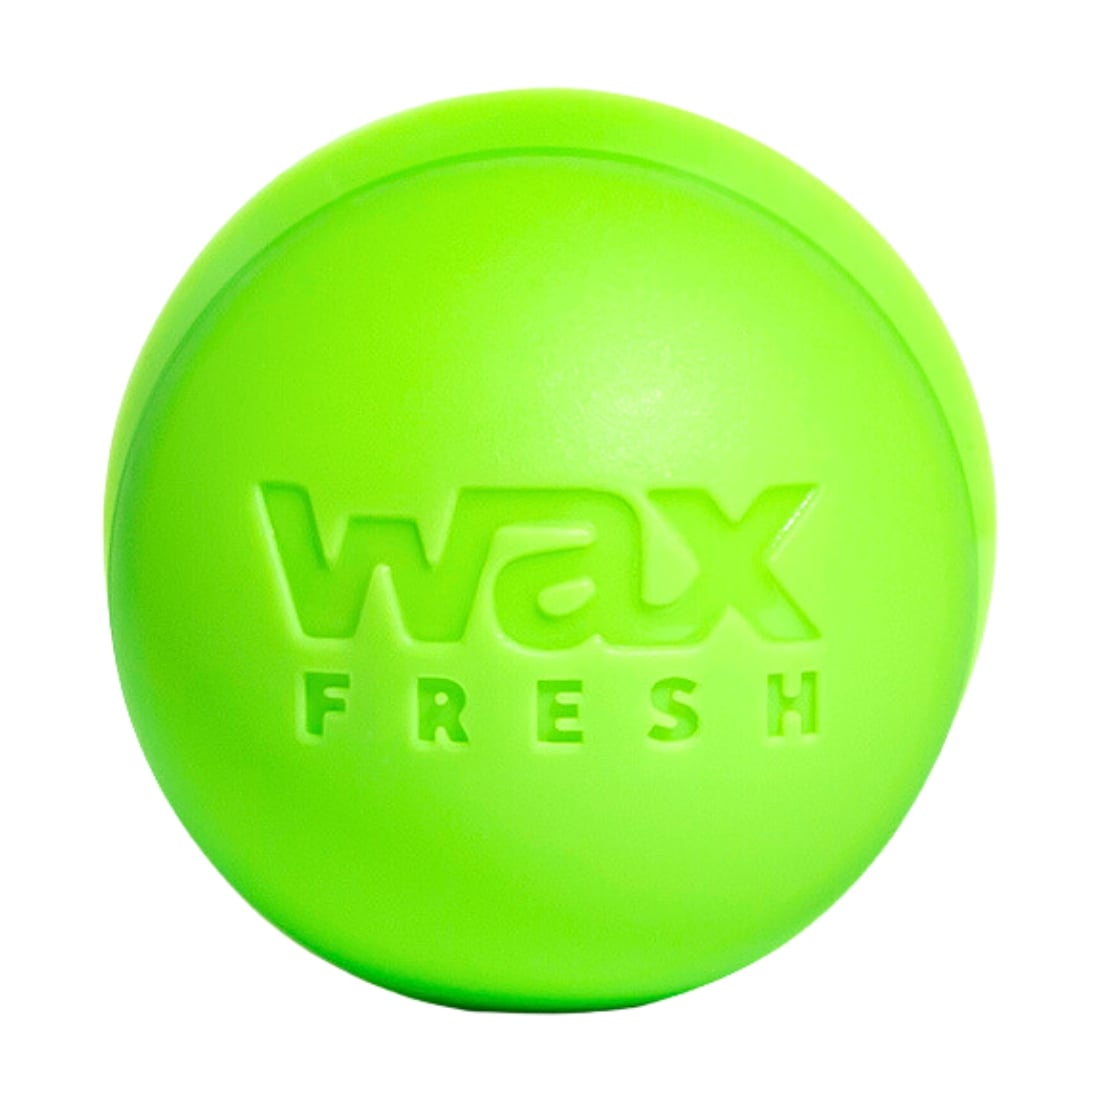 Wax Fresh Surfboard Wax Remover/Scraper - Green - Surf Wax Remover by Wax Fresh One Size